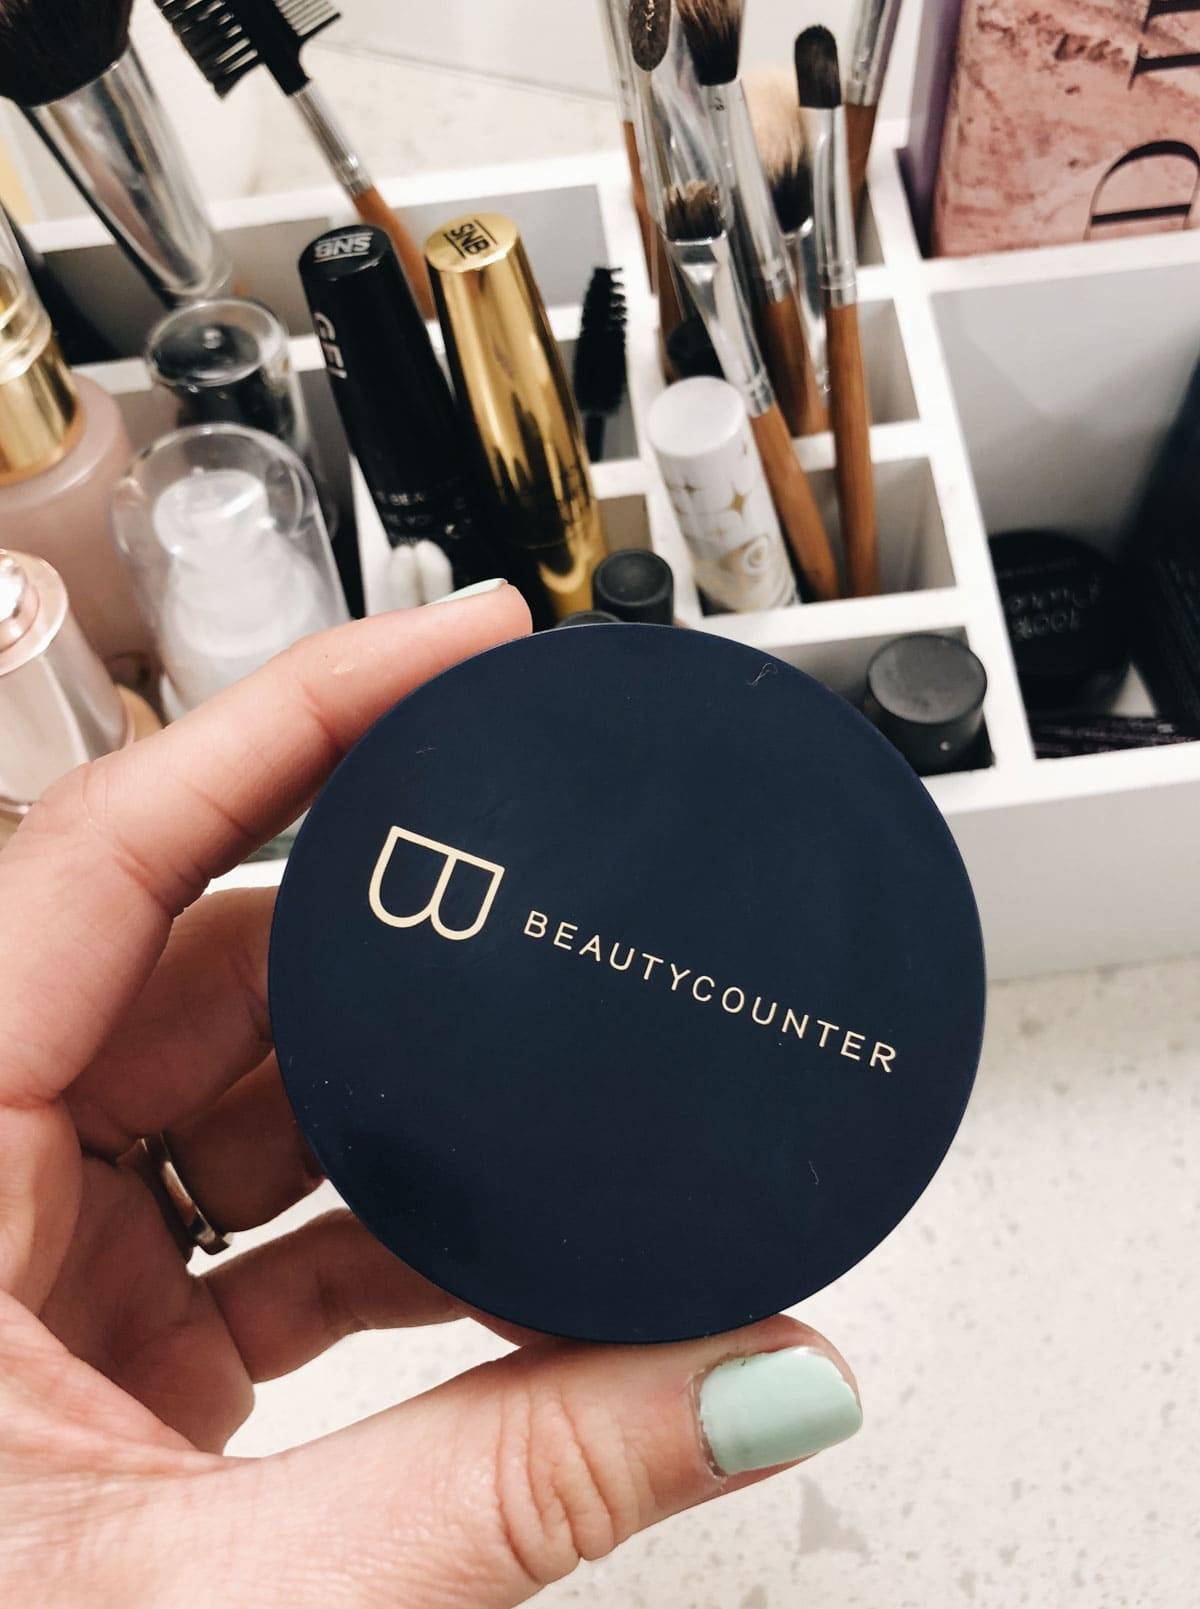 Beautycounter product.